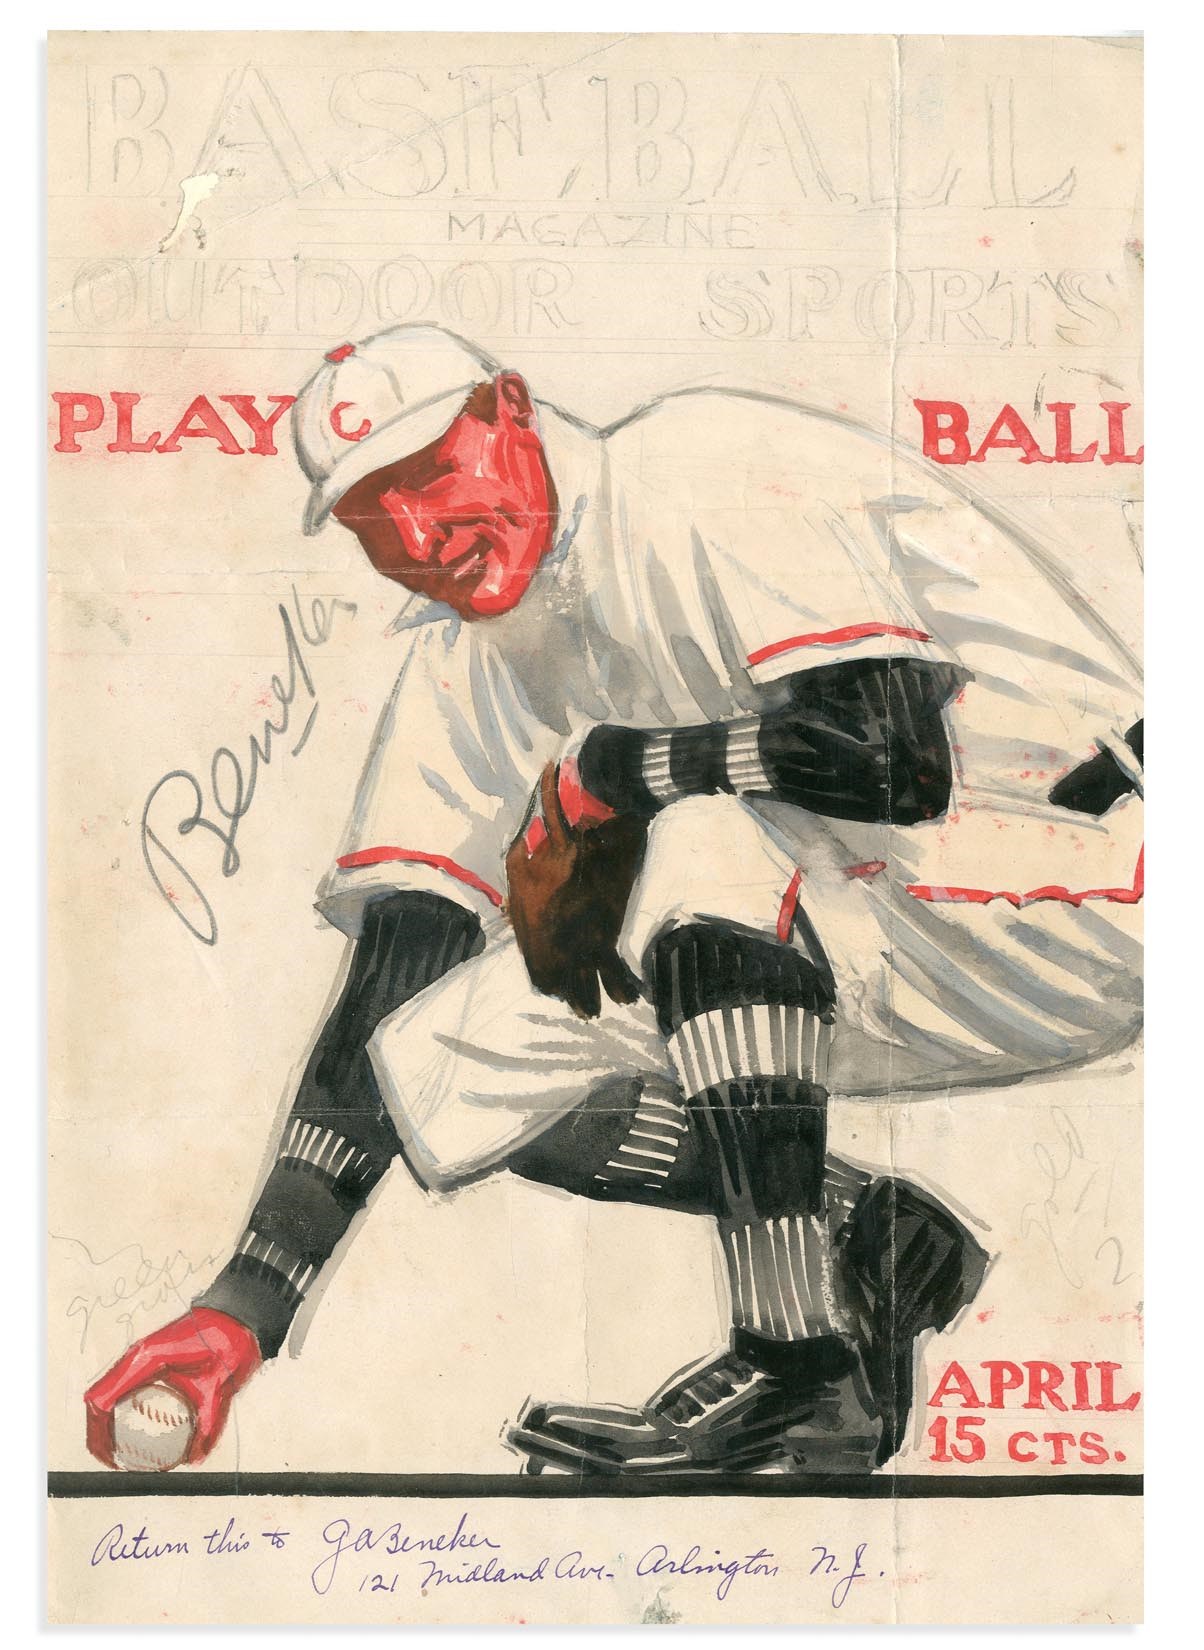 The Baseball Magazine Original Art - April 1912 "Baseball Magazine" Cover Art Study by Gerrit Beneker (1882-1934)